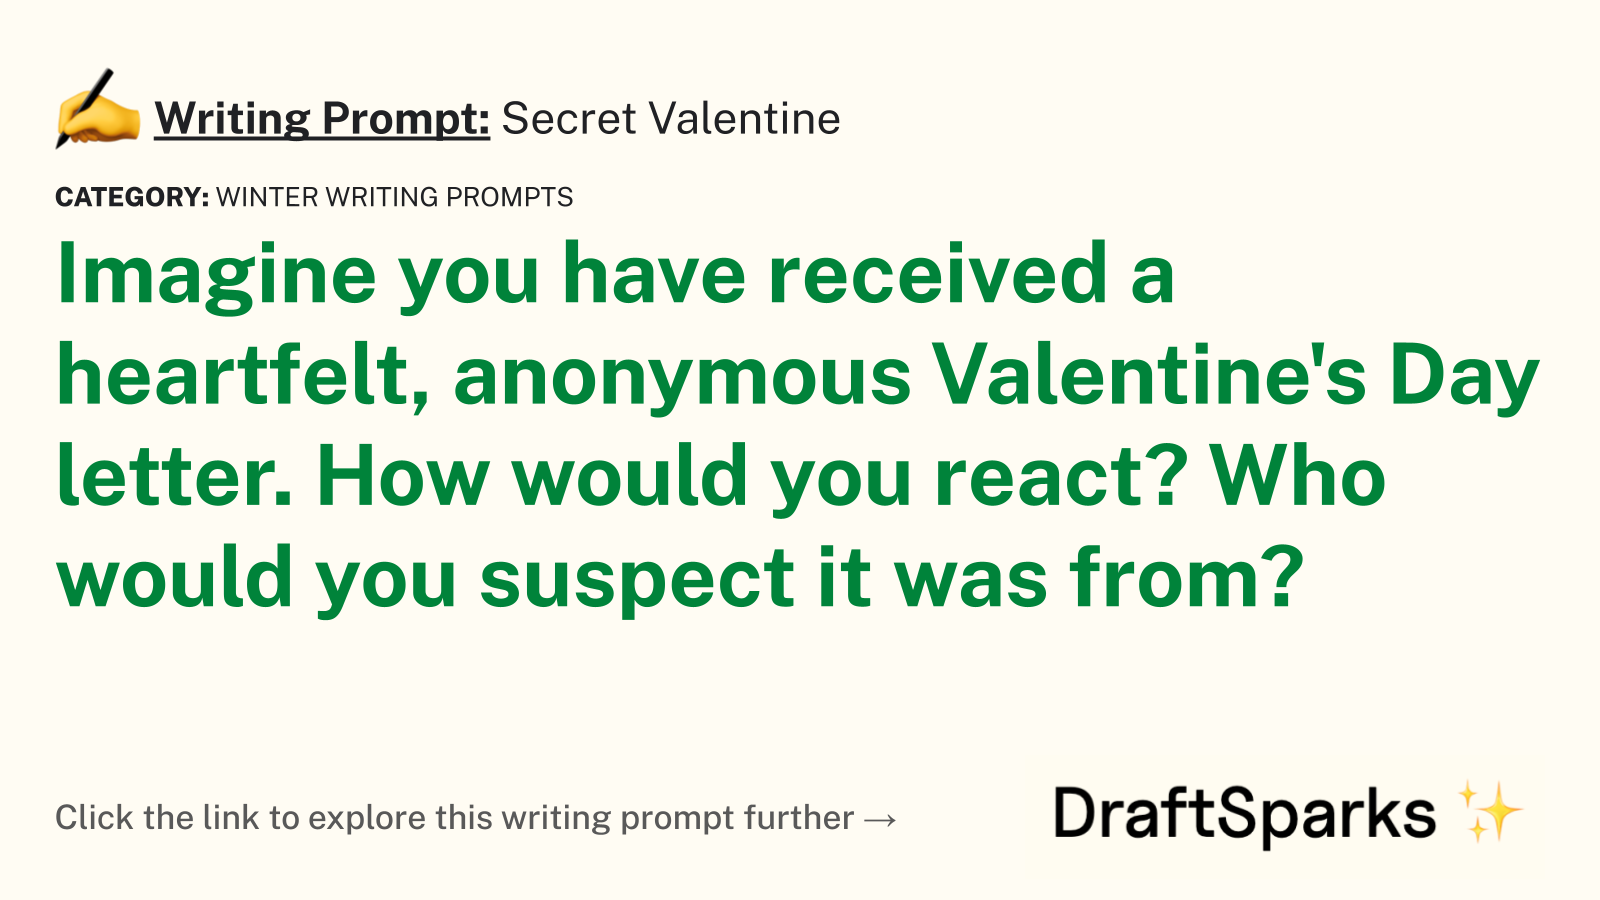 Secret Valentine